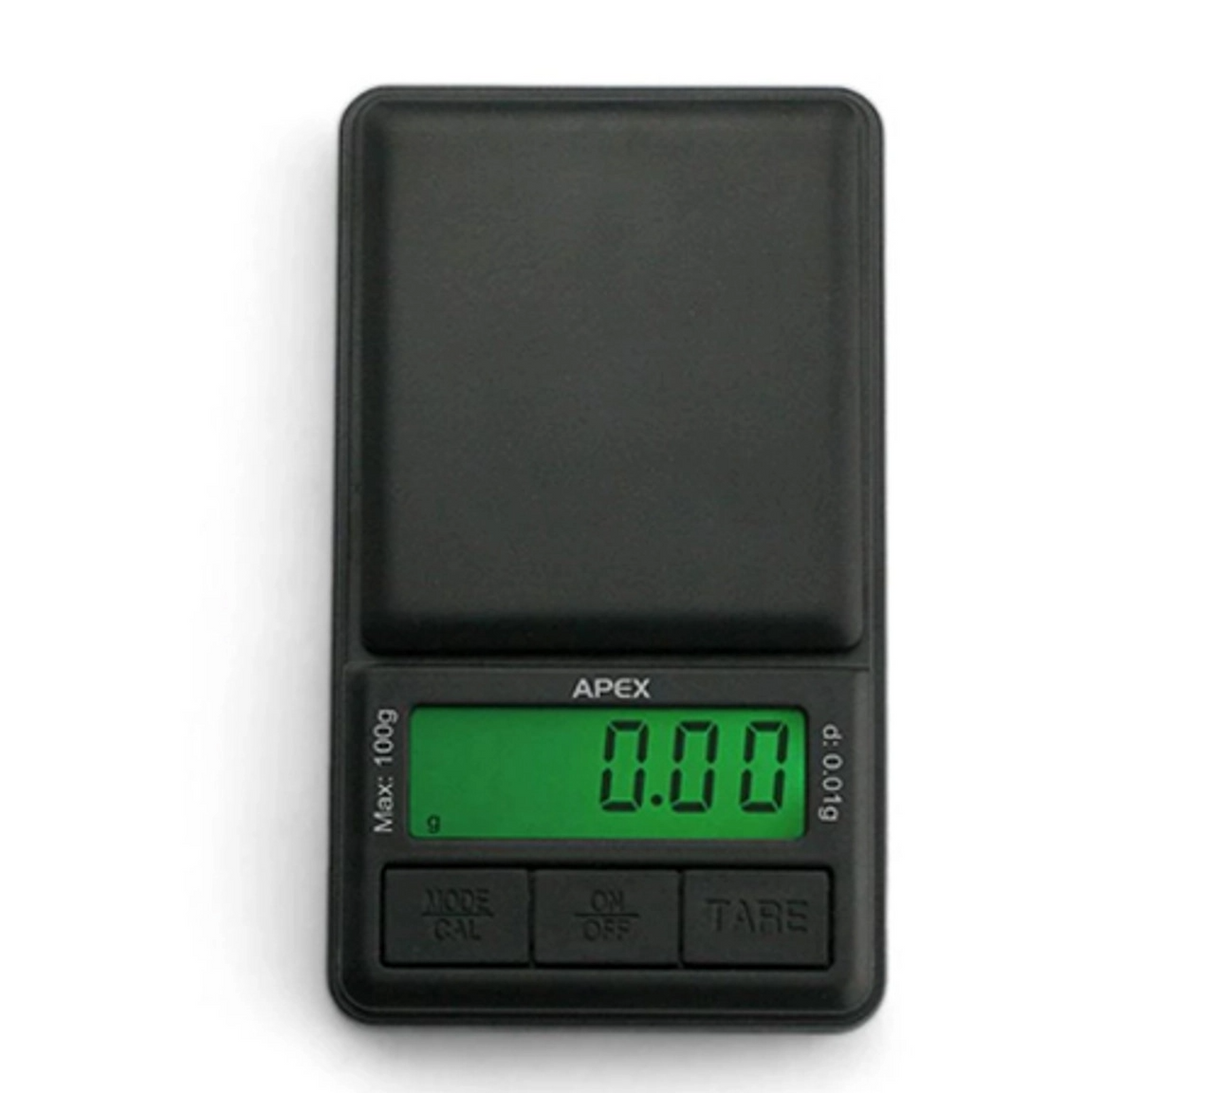 Tru Weigh Digital Scale - Apex - 100GX 0.01G